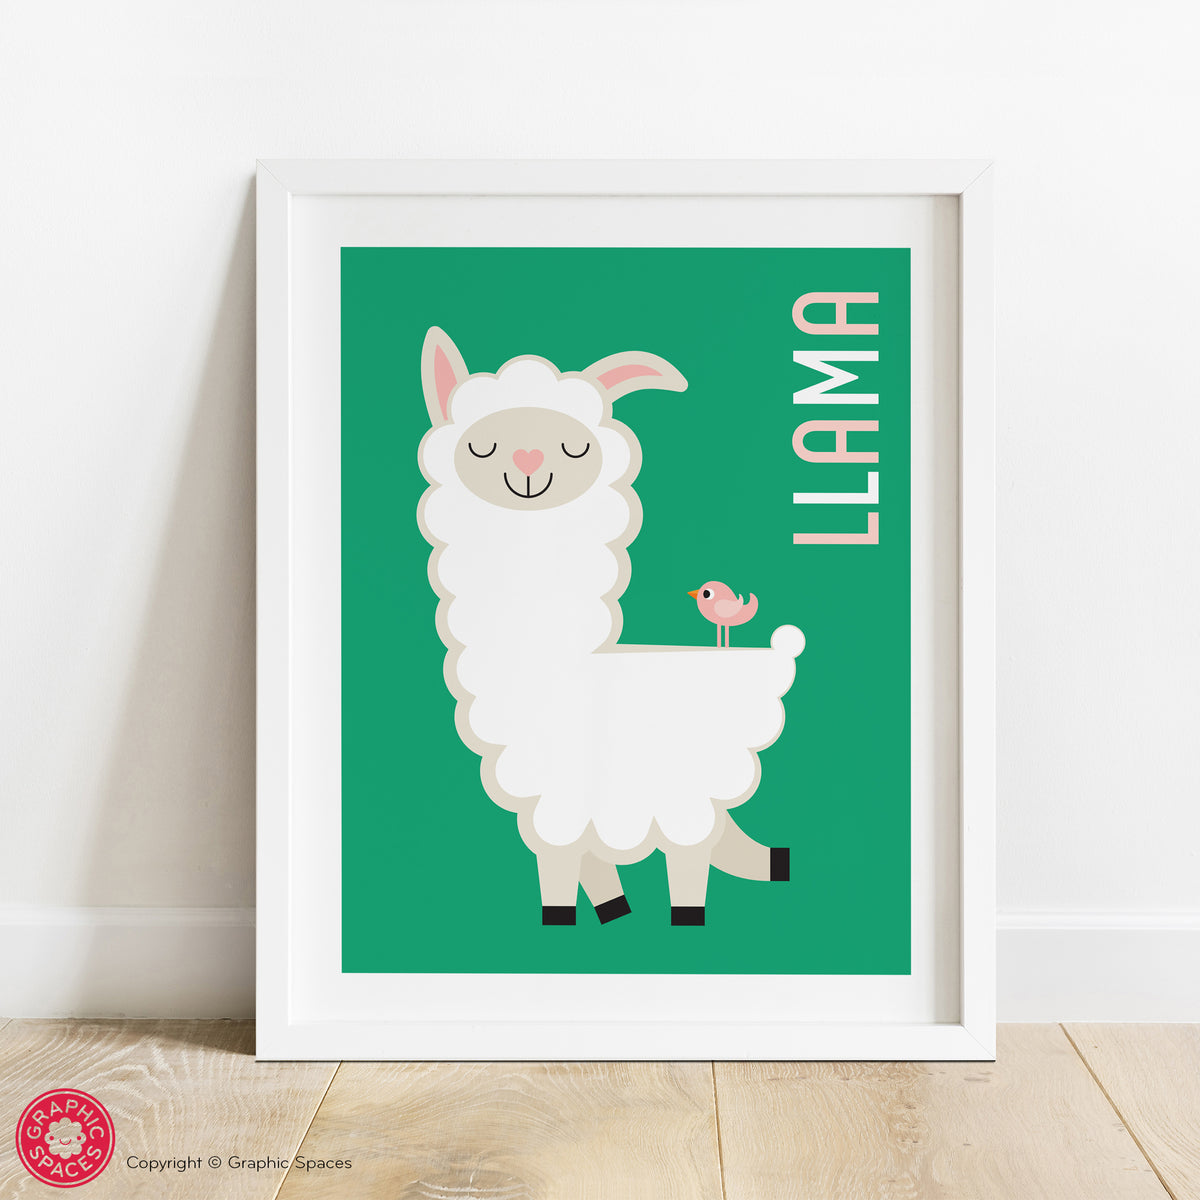 Sheep &amp; Llama Nursery Art Prints - Set of 2